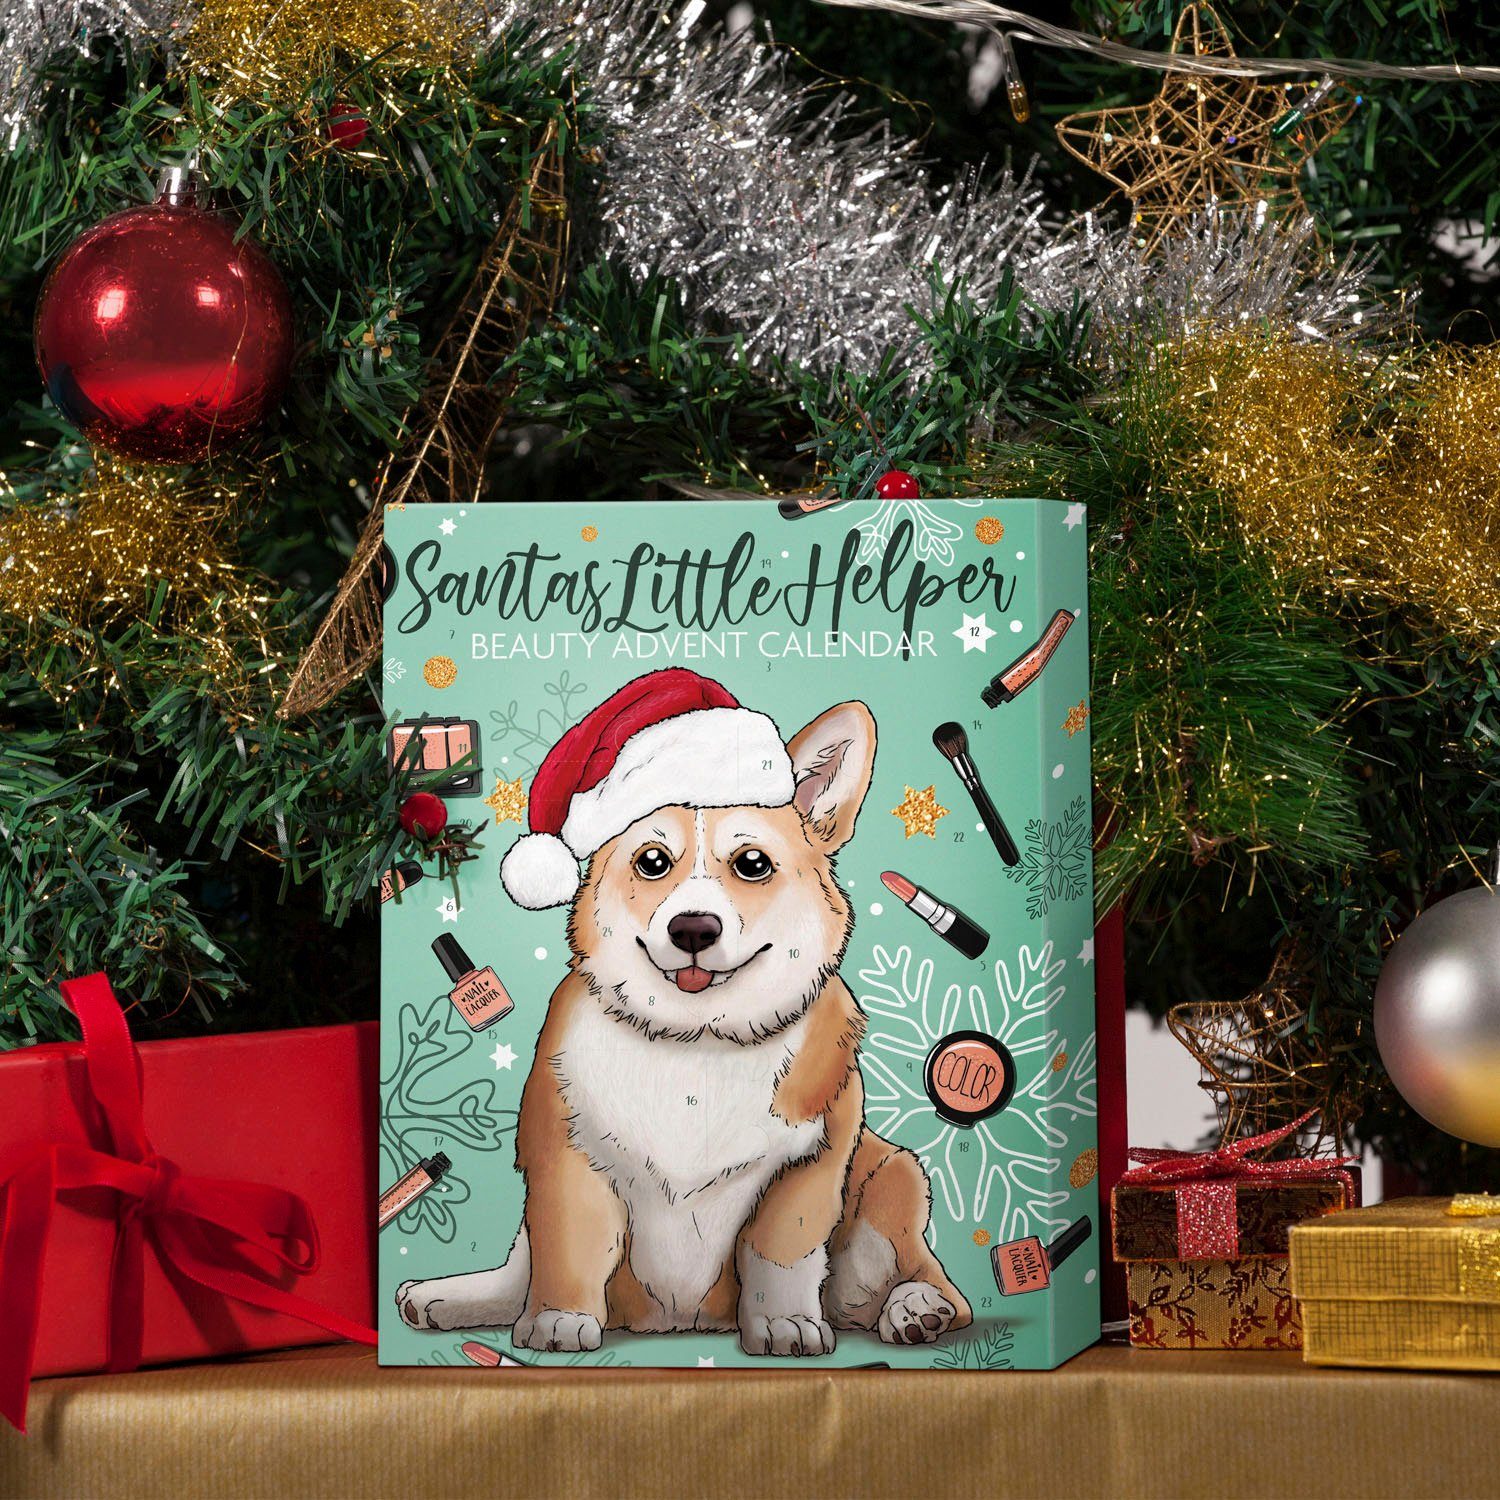 Little - Beauty Adventskalender Helper Calendar (Packung, 24-tlg) Advent Santas